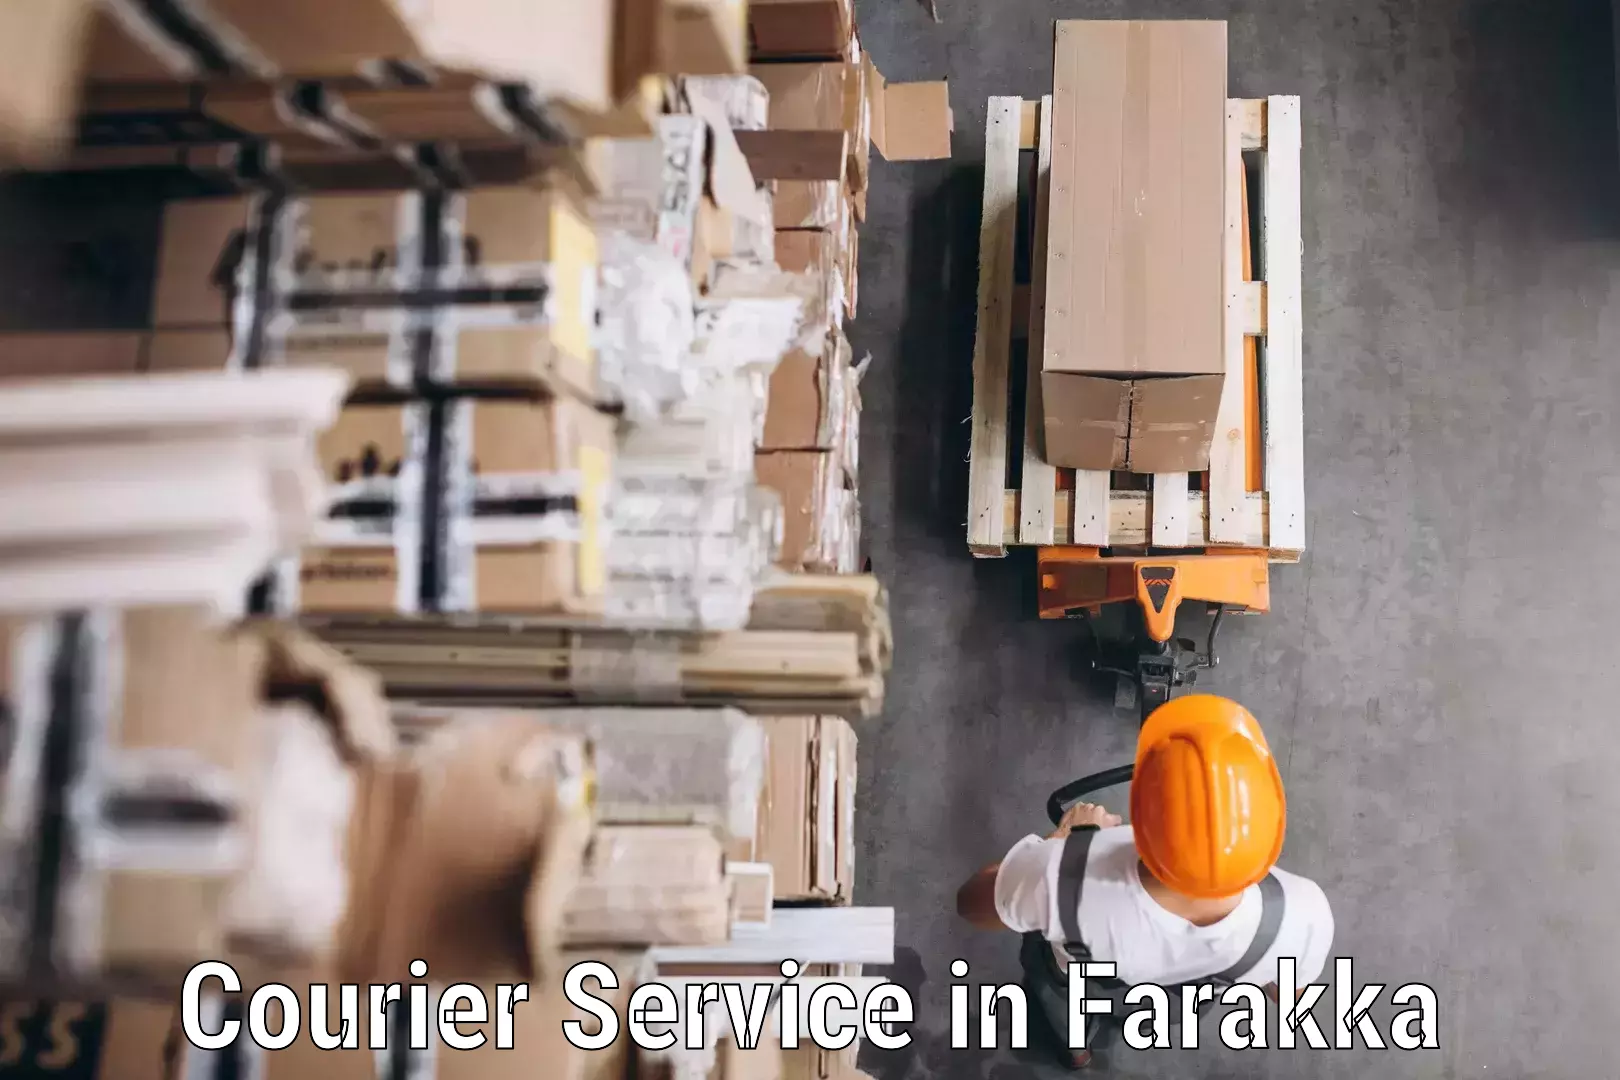 Express package handling in Farakka